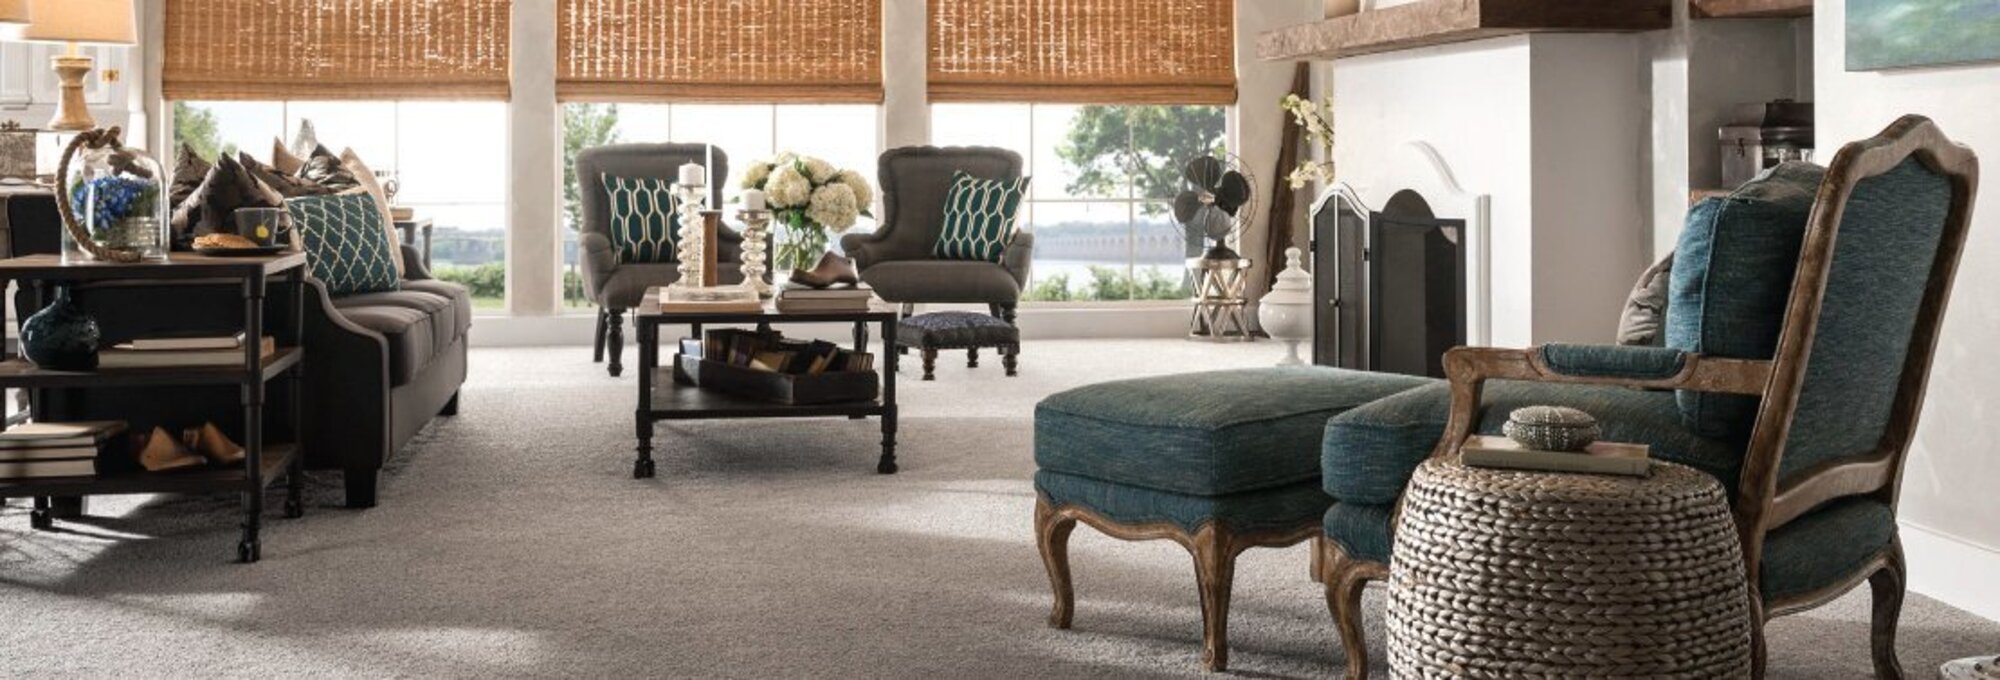 Classic living room - Carpet Clearance Warehouse in Keene